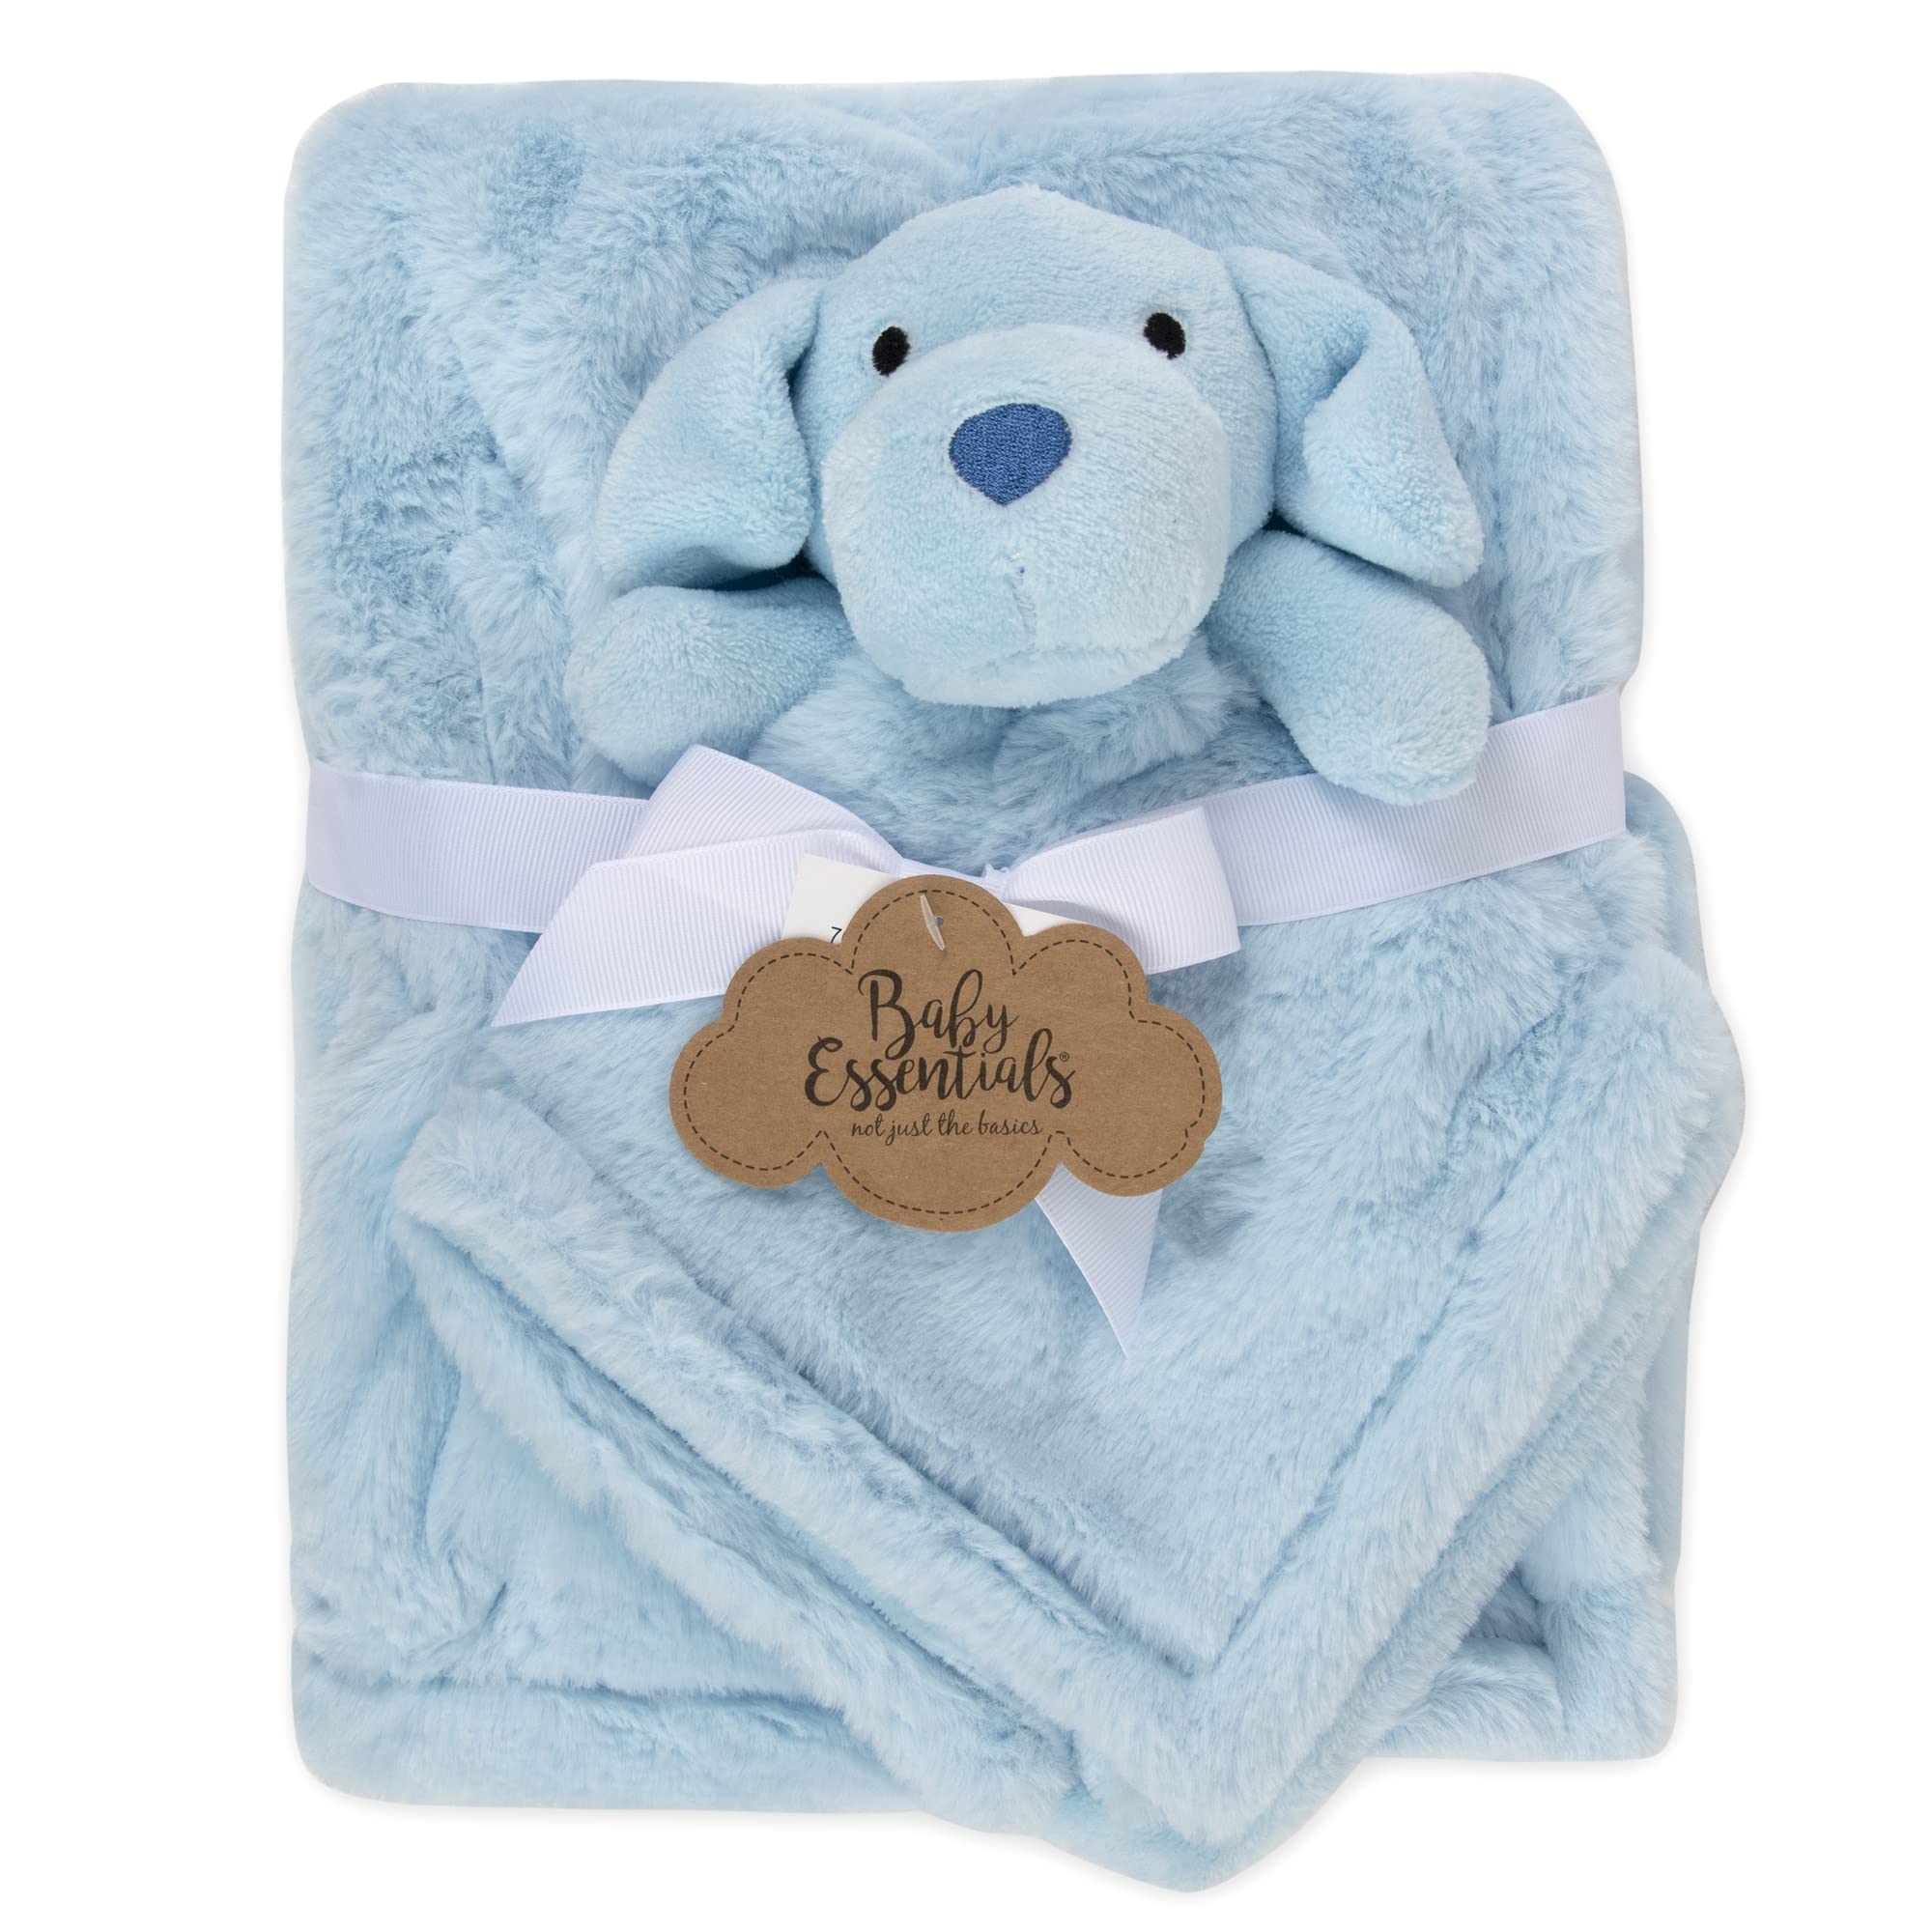 A cozy blanket or a pair of cuddling teddy bears.